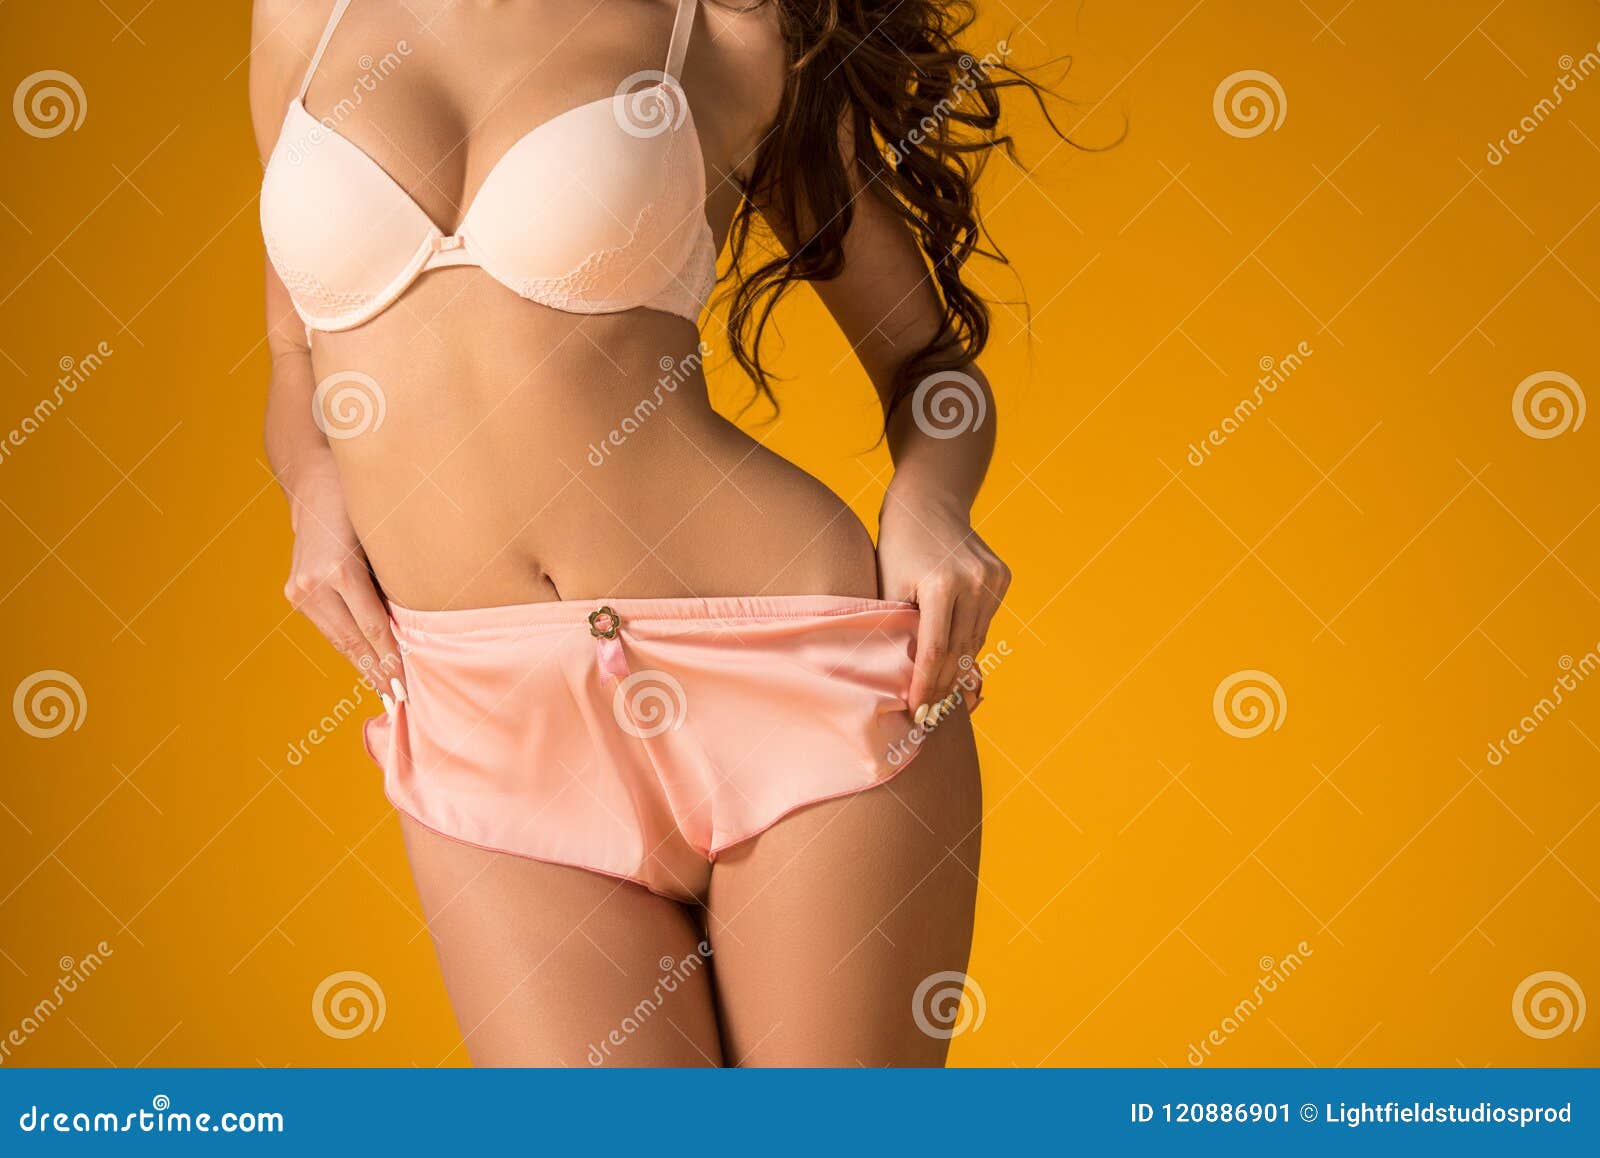 chrystal garner recommends Girl Take Off Underwear